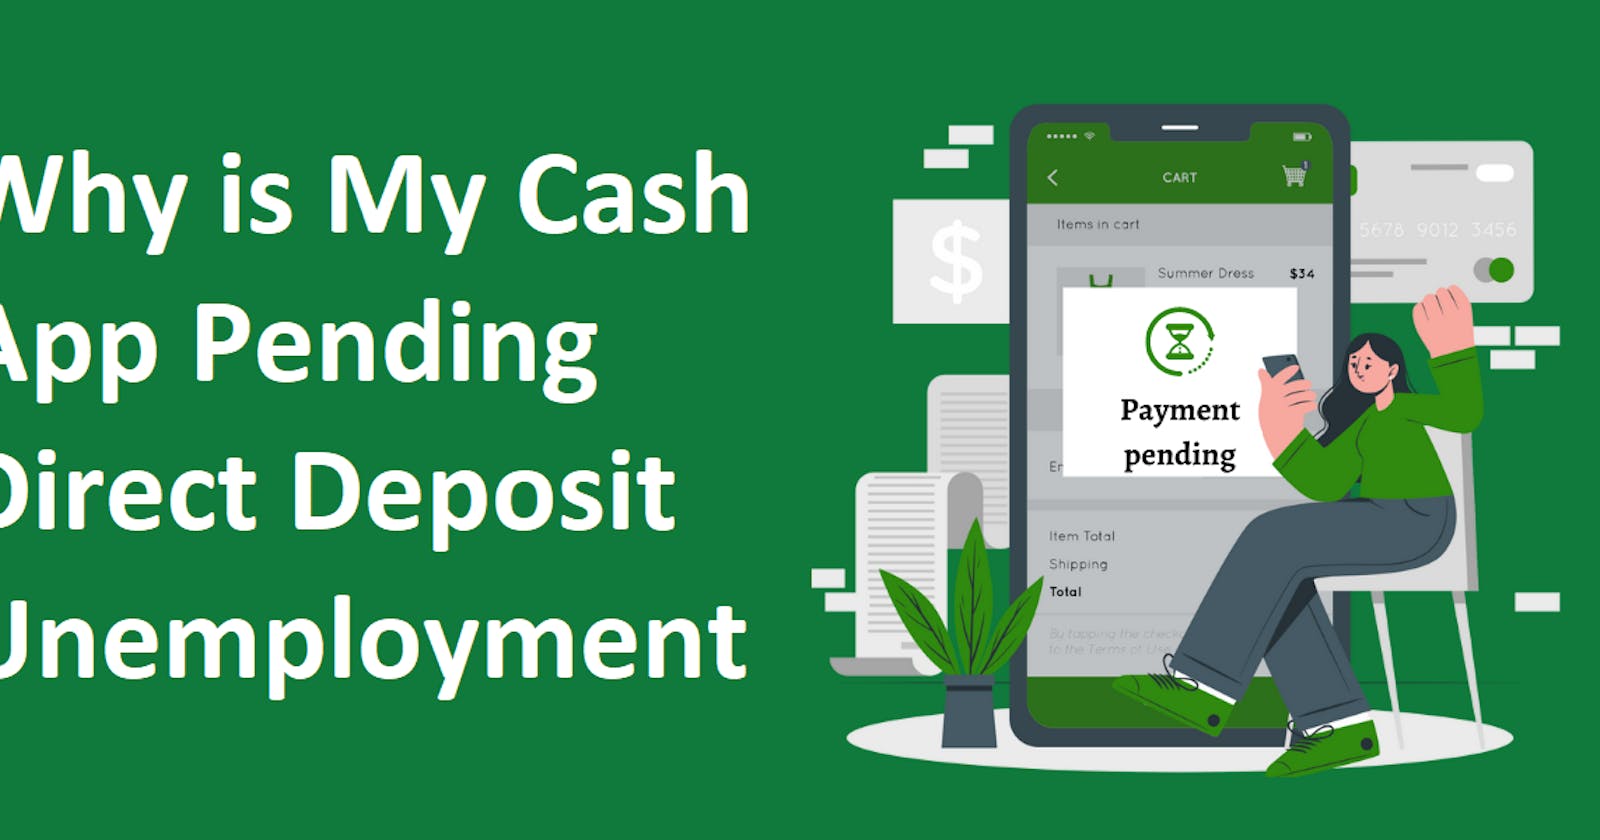 Why is My Cash App Pending Direct Deposit Unemployment